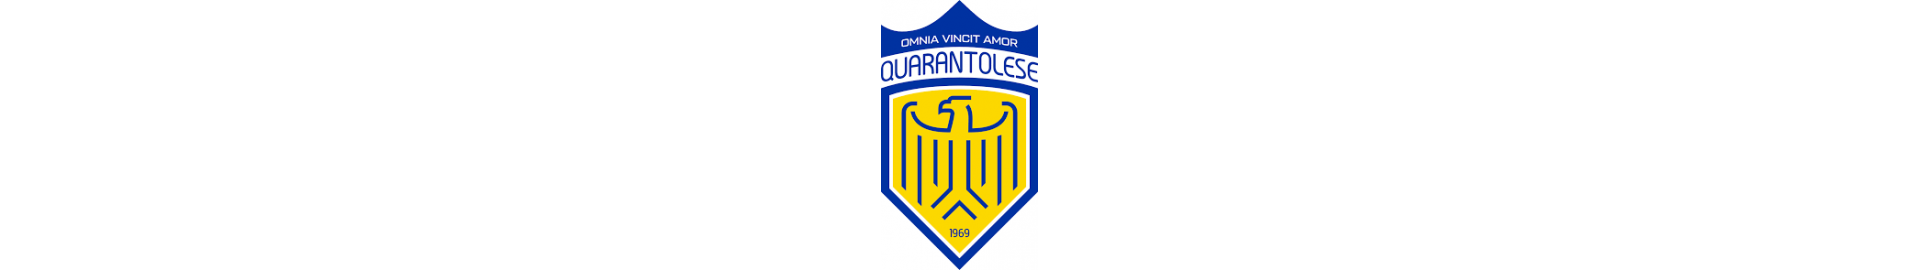 Project Quarantolese Calcio